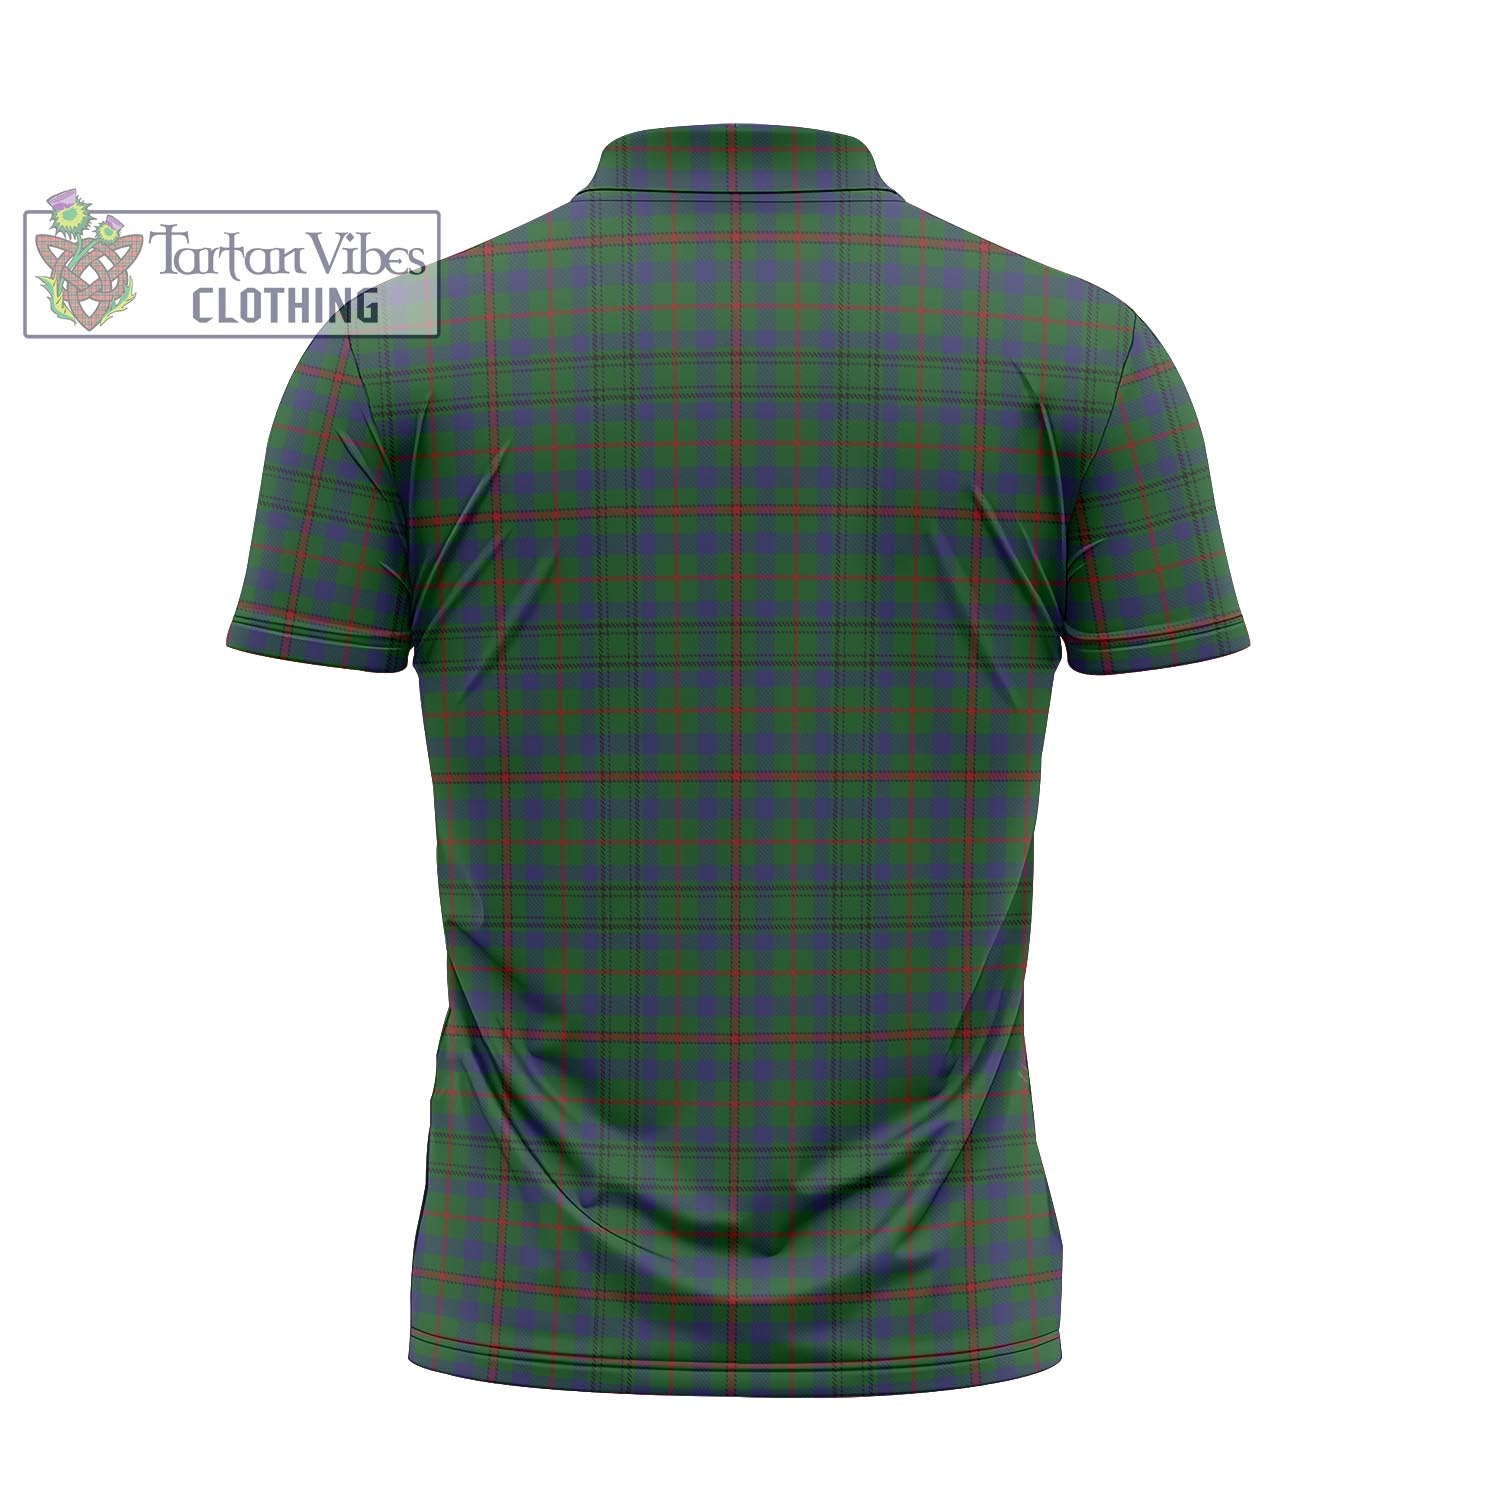 Tartan Vibes Clothing Moncrieff of Atholl Tartan Zipper Polo Shirt with Family Crest